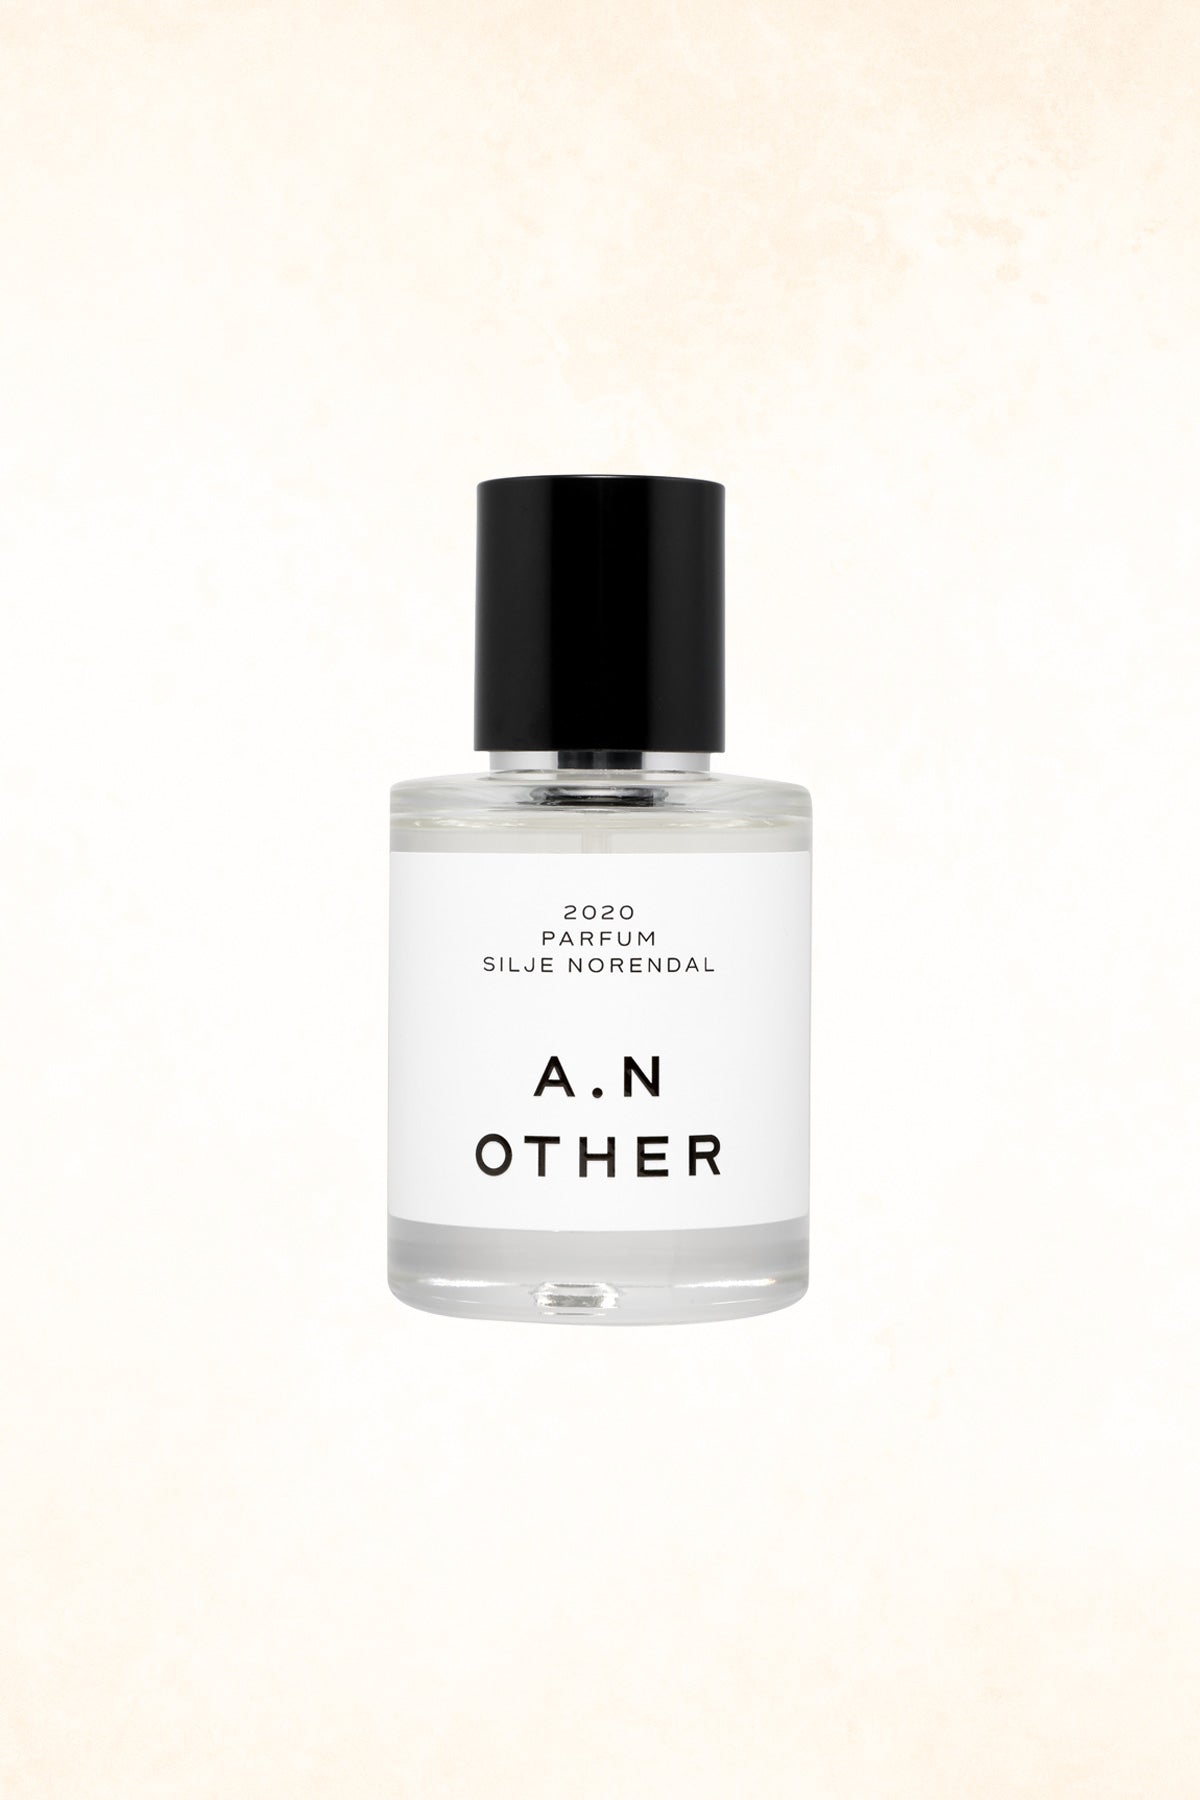 A.N OTHER – SN/2020 Parfum - 50 ml